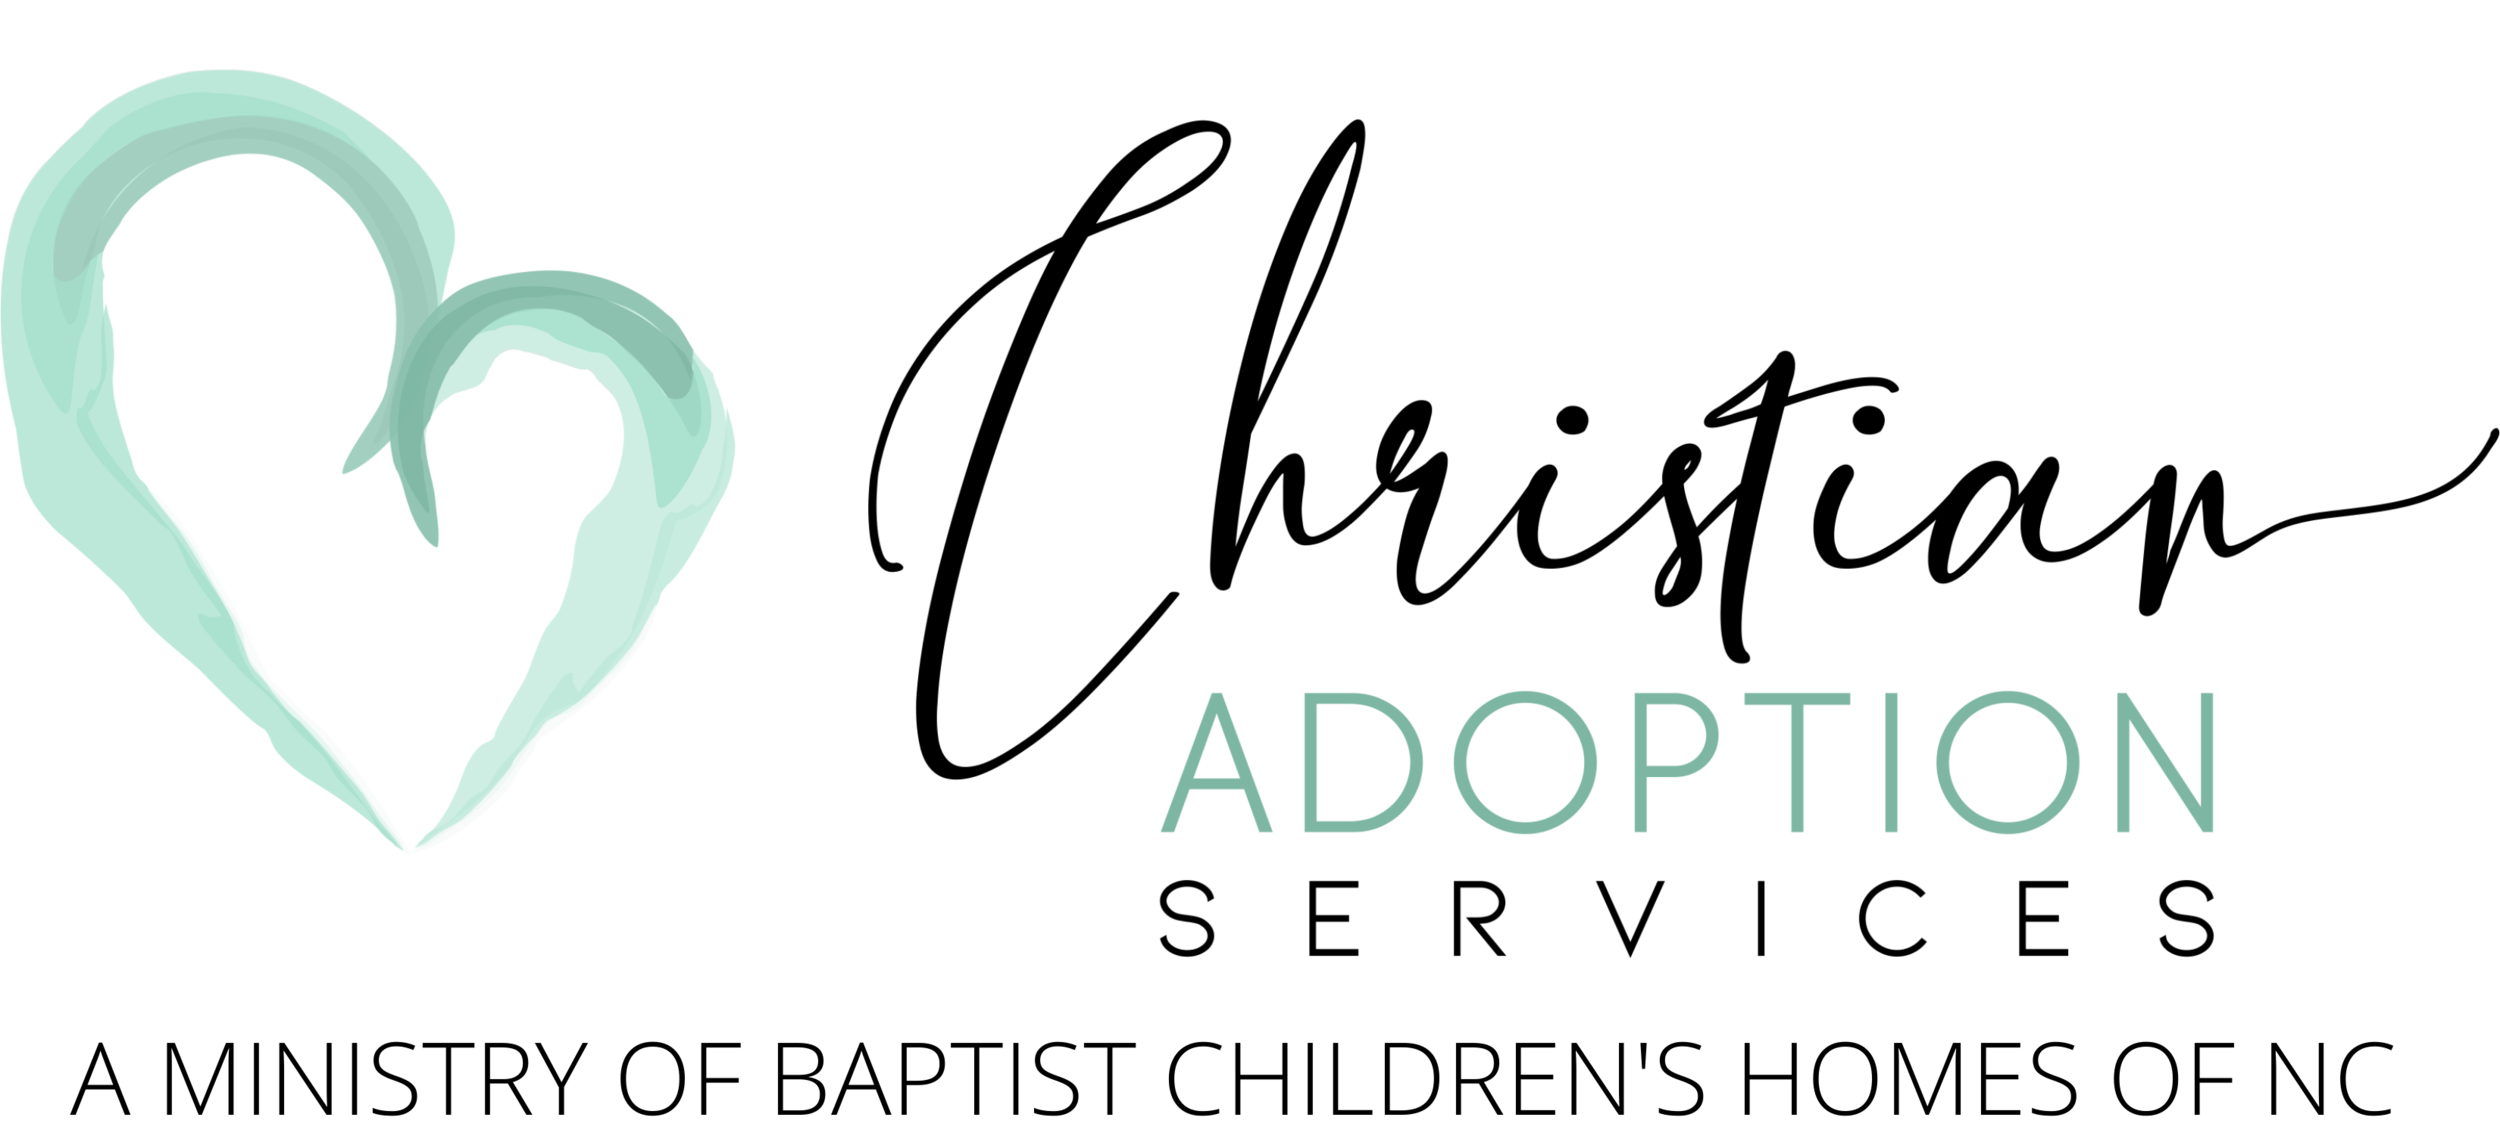 Christian Adoption Services